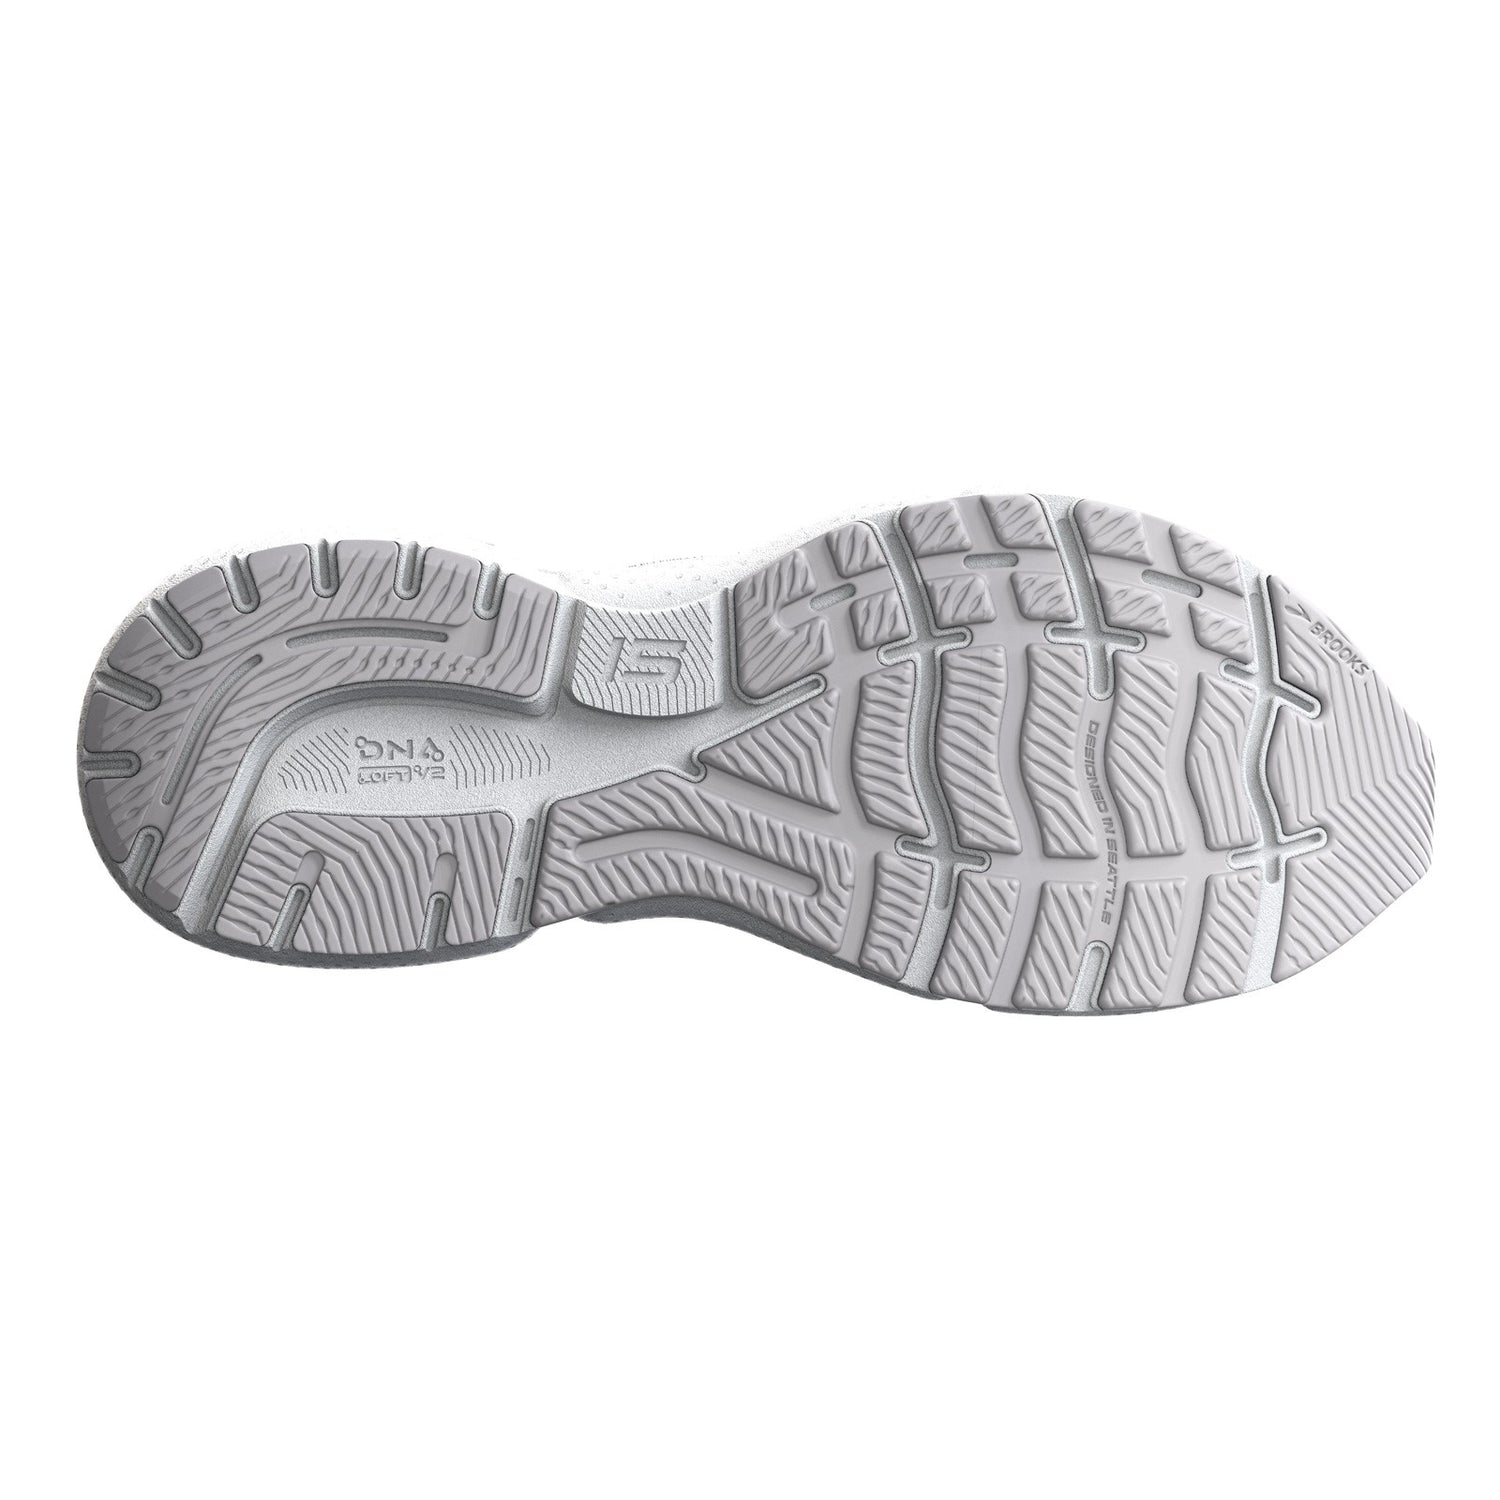 Peltz Shoes  Women's Brooks Ghost 15 Running Shoe - Wide Width Oyster/Alloy/White 120380 1D 112